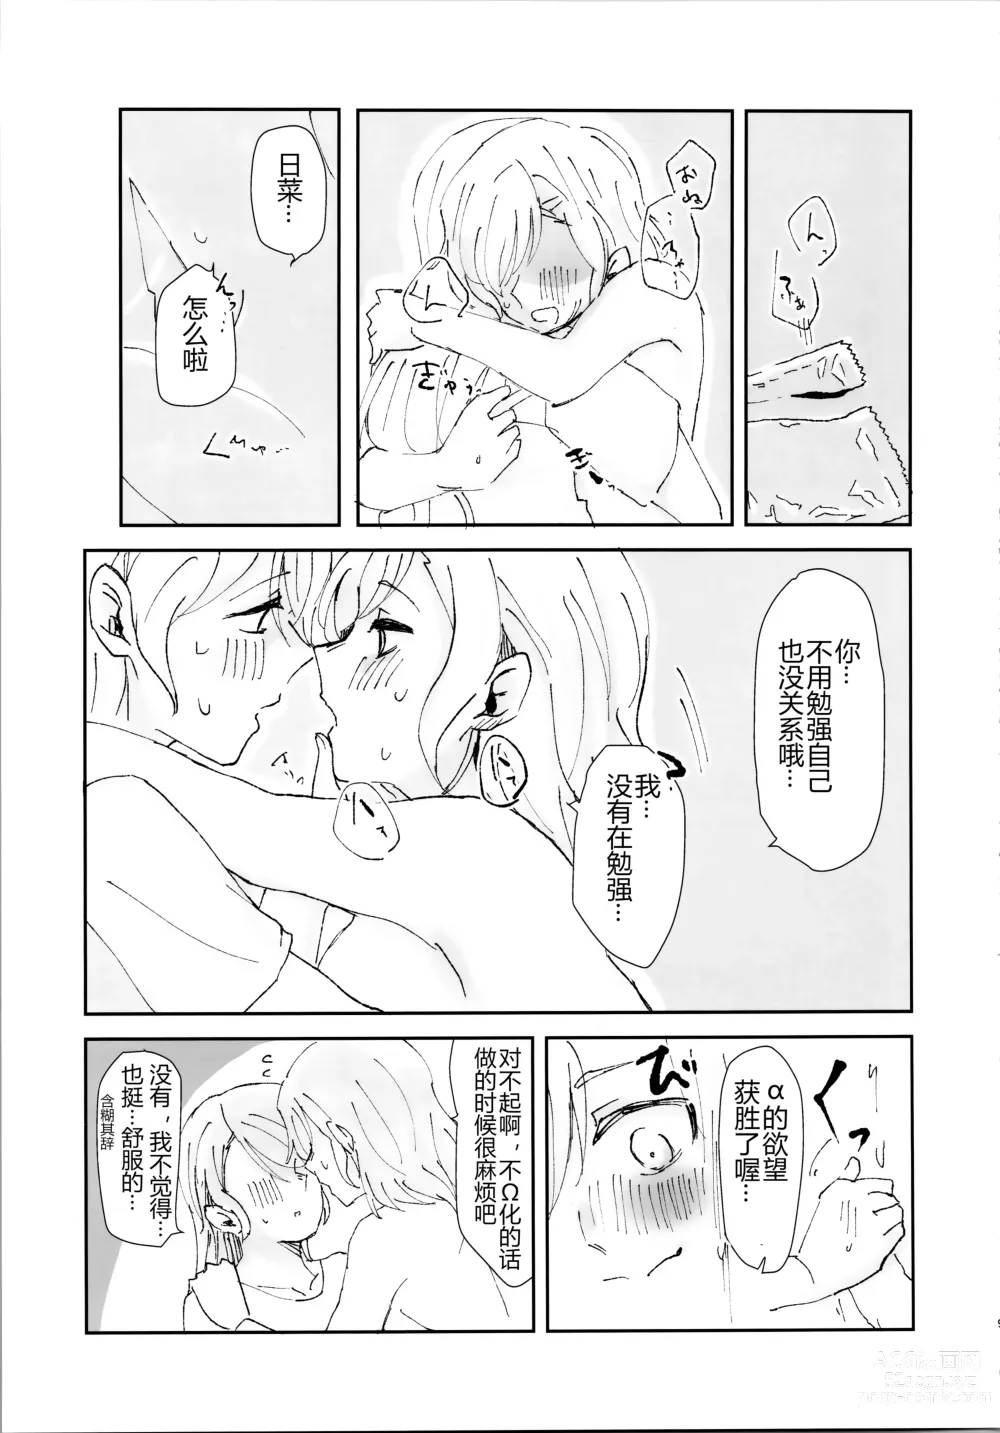 Page 9 of doujinshi 只要爱着彼此就好